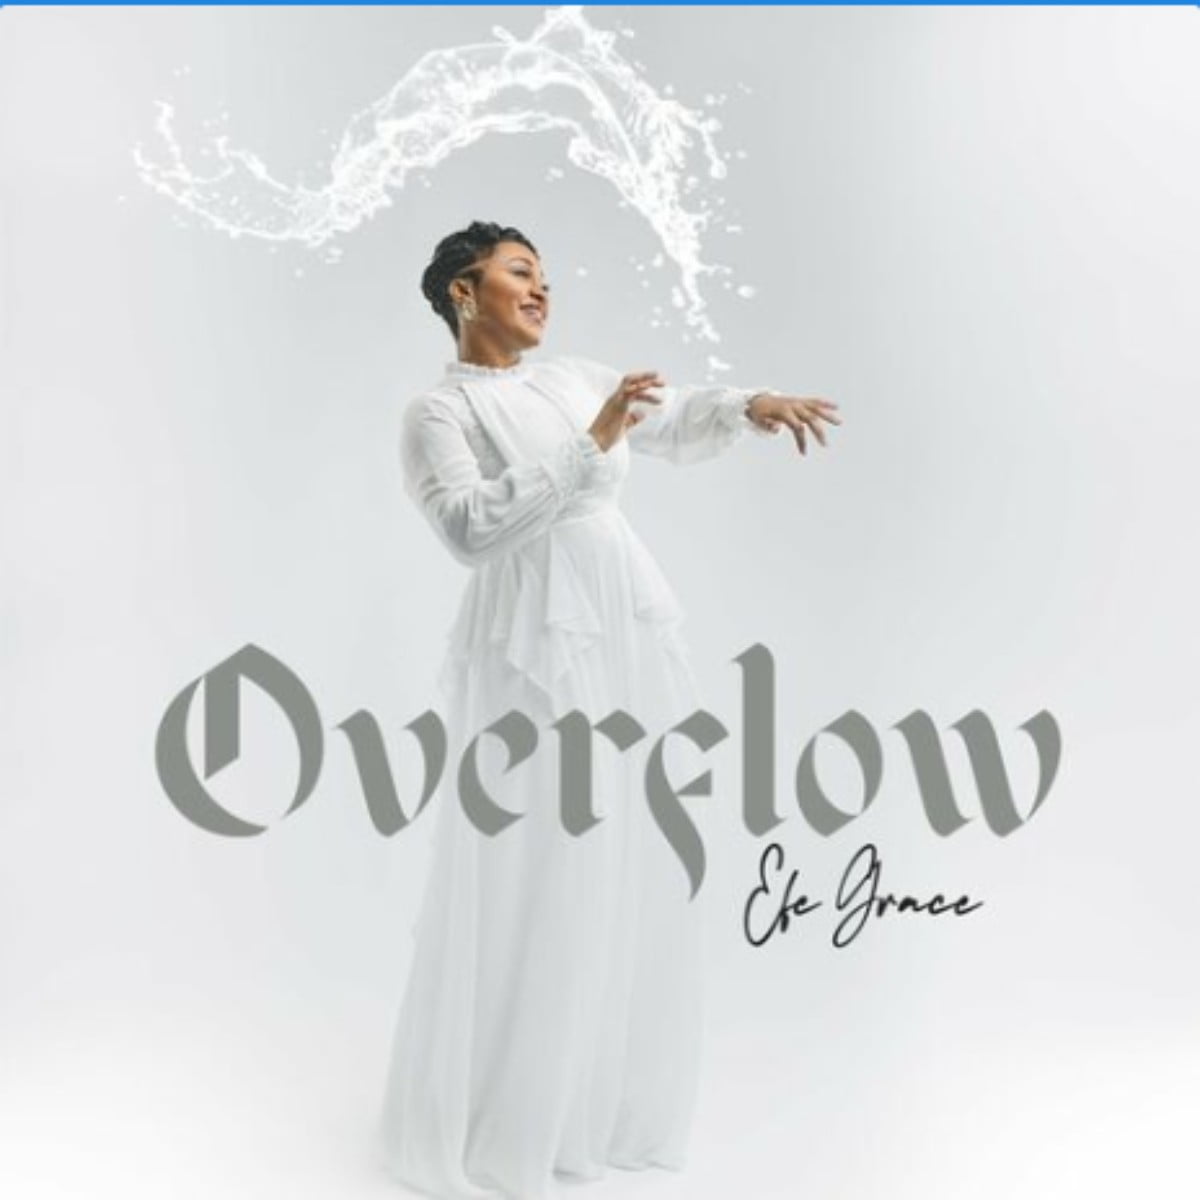 Efe Grace Overflow mp3 lyrics video download